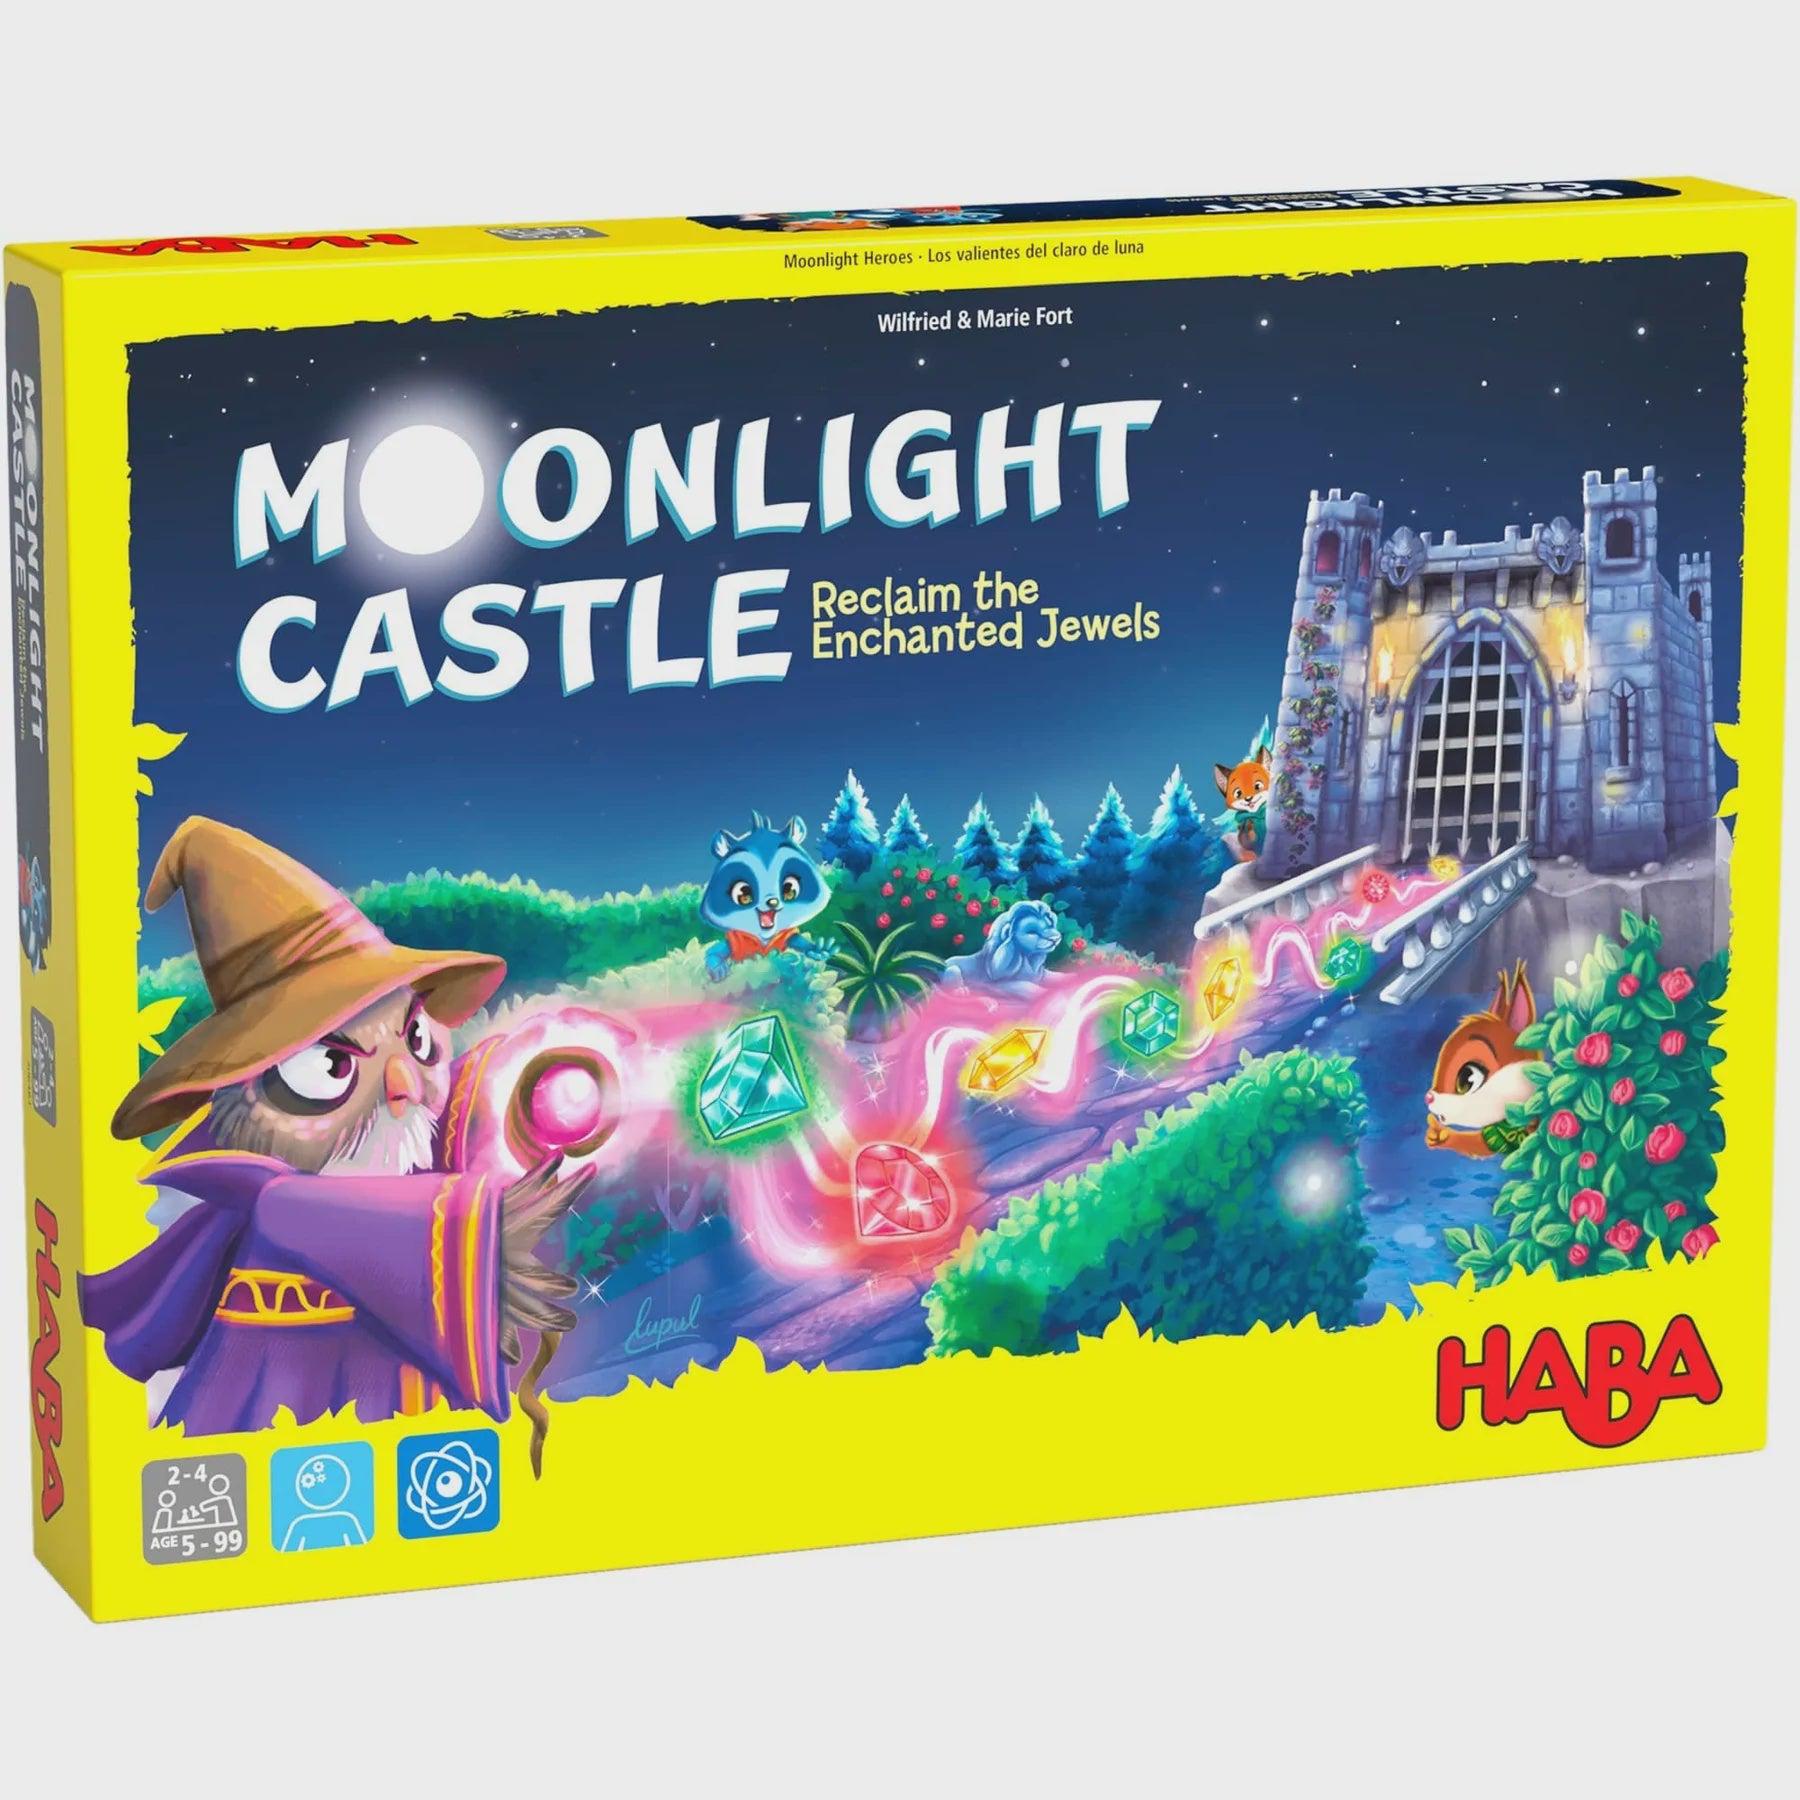 Haba-Moonlight Castle-306483-Legacy Toys